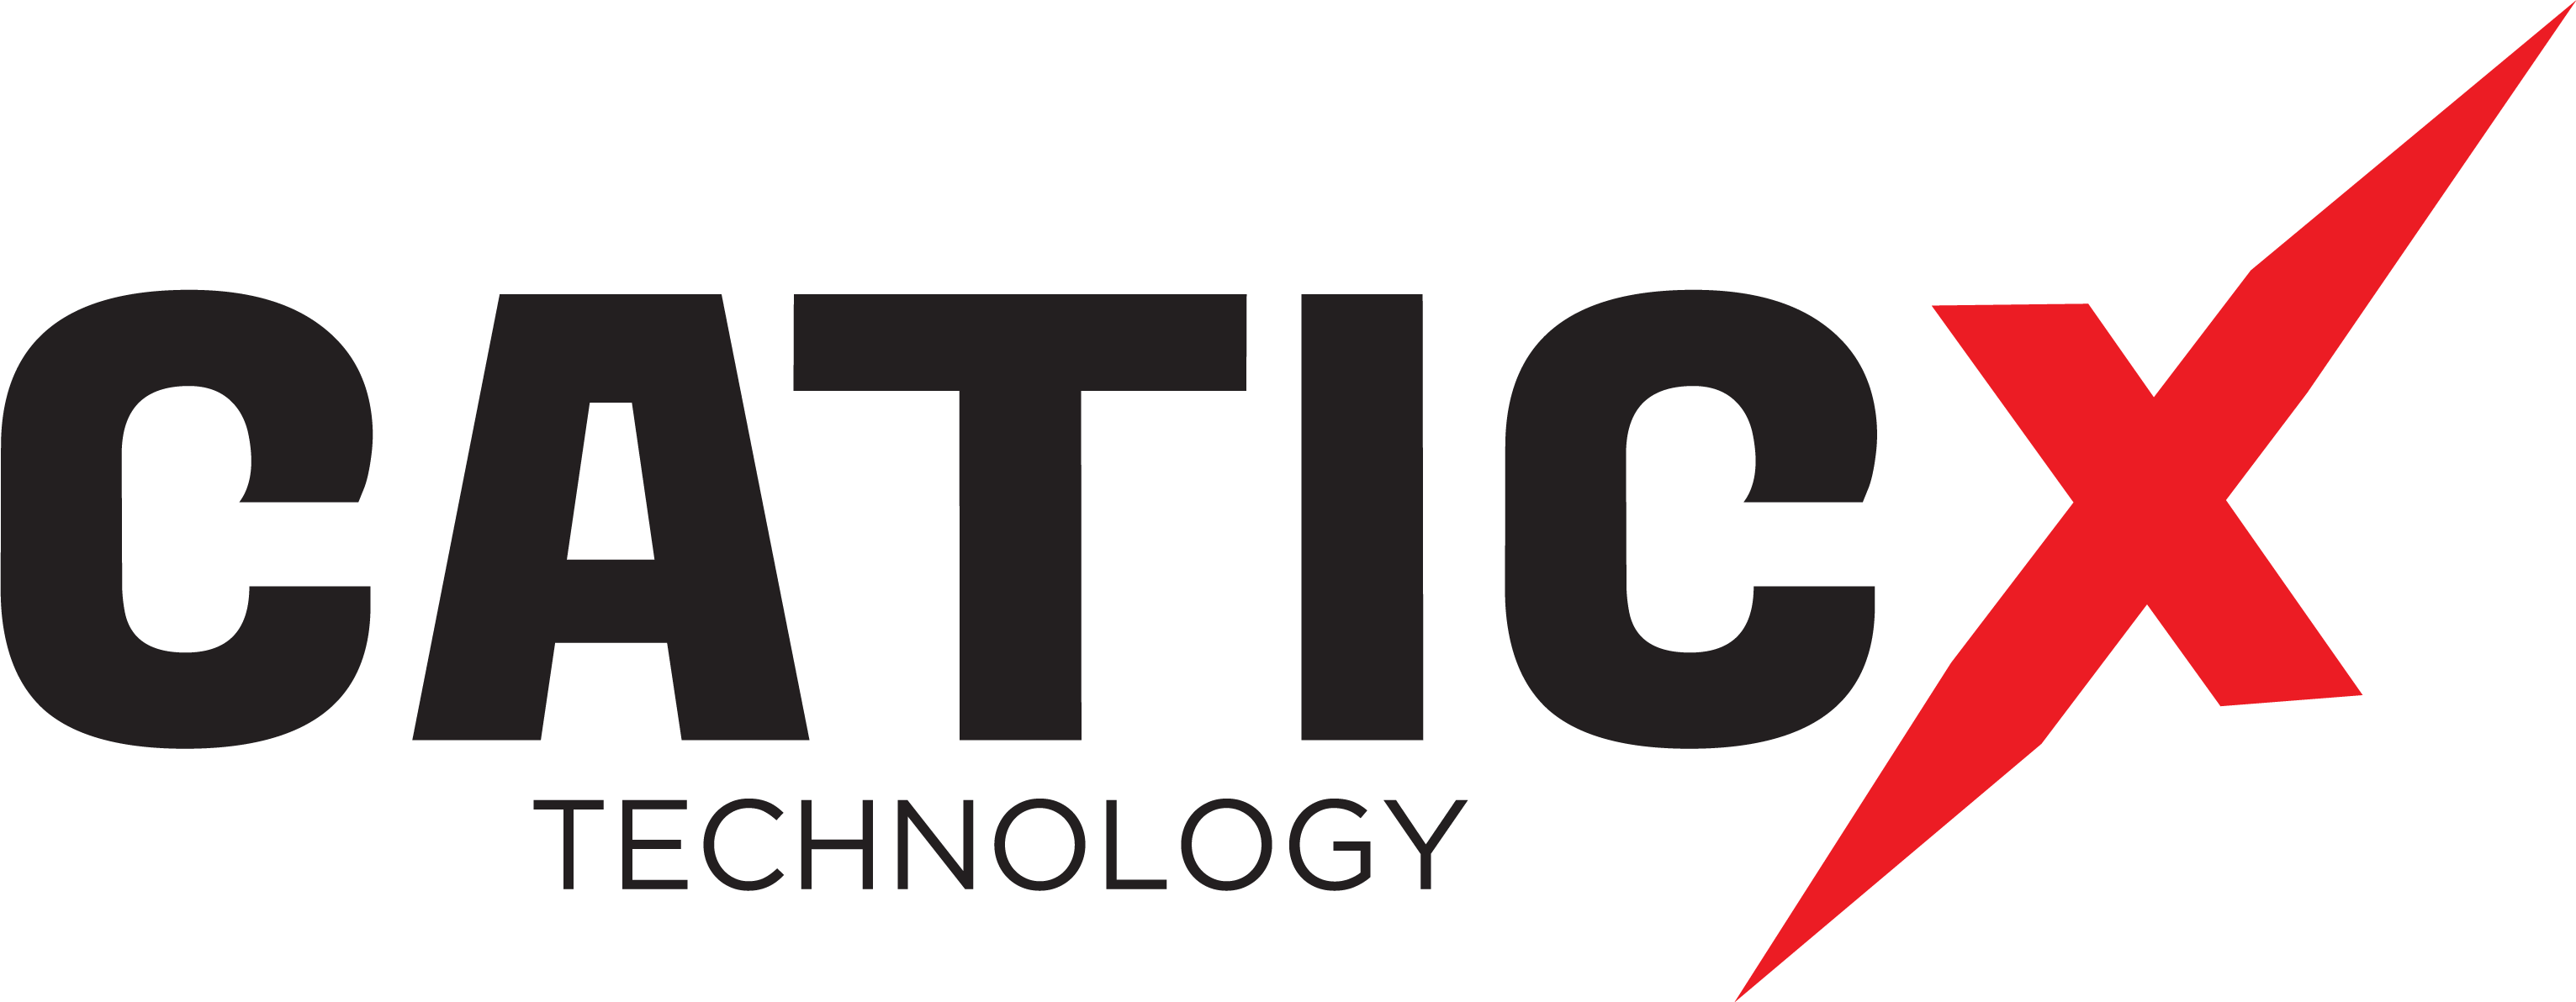 Caticx Technology Logo